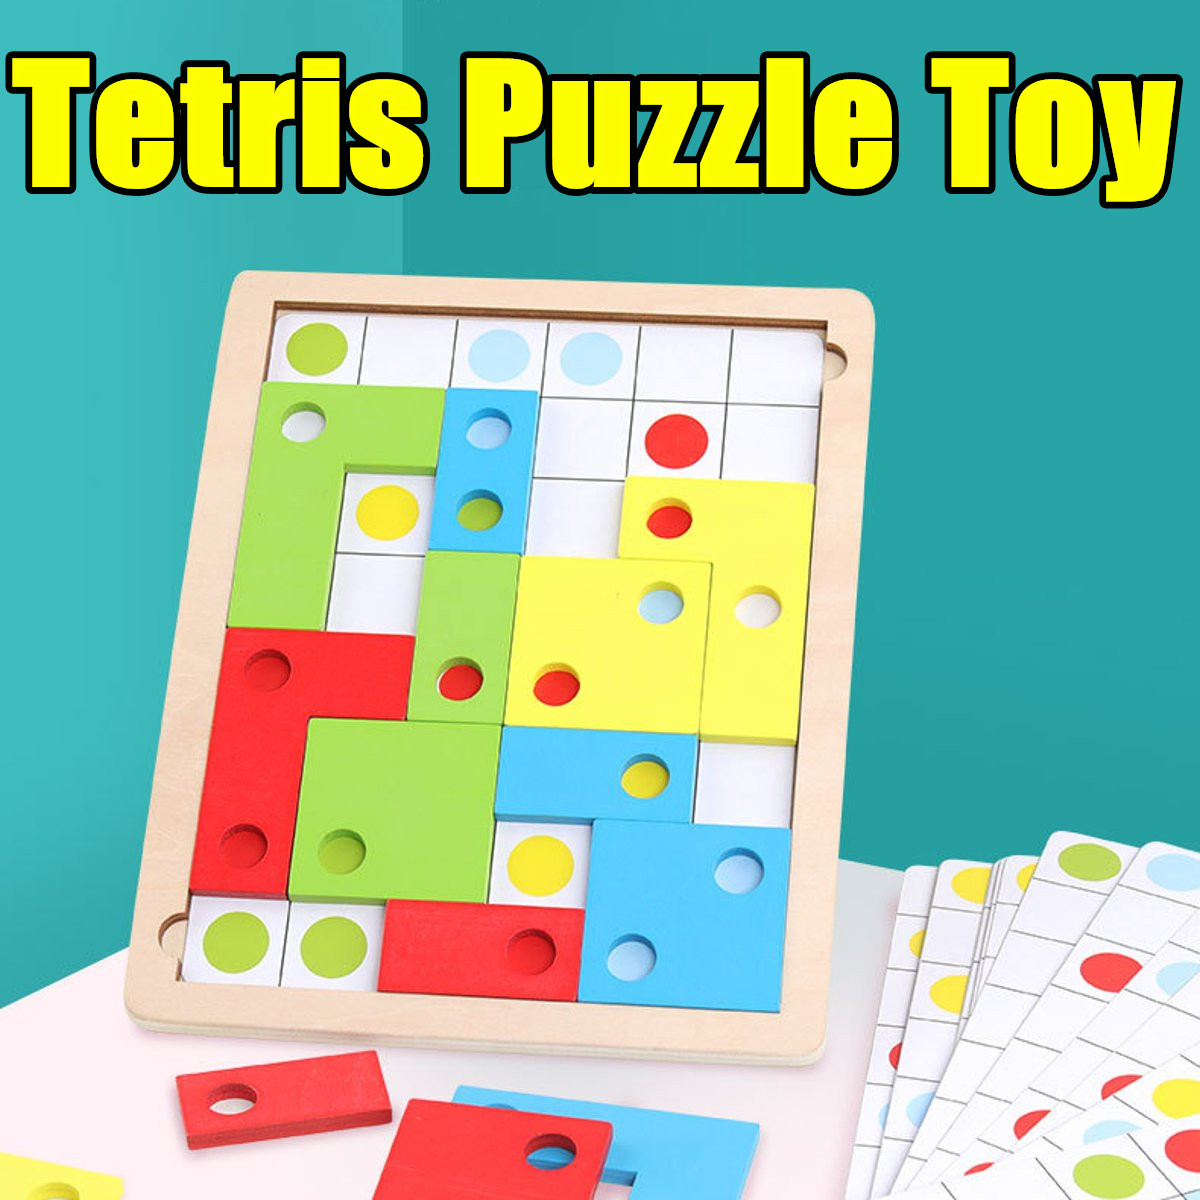 Tetris-Brain-3D-Puzzle-Blocks-Early-Educational-Intelligence-Development-Toys-for-Childrens-Gift-1688419-1